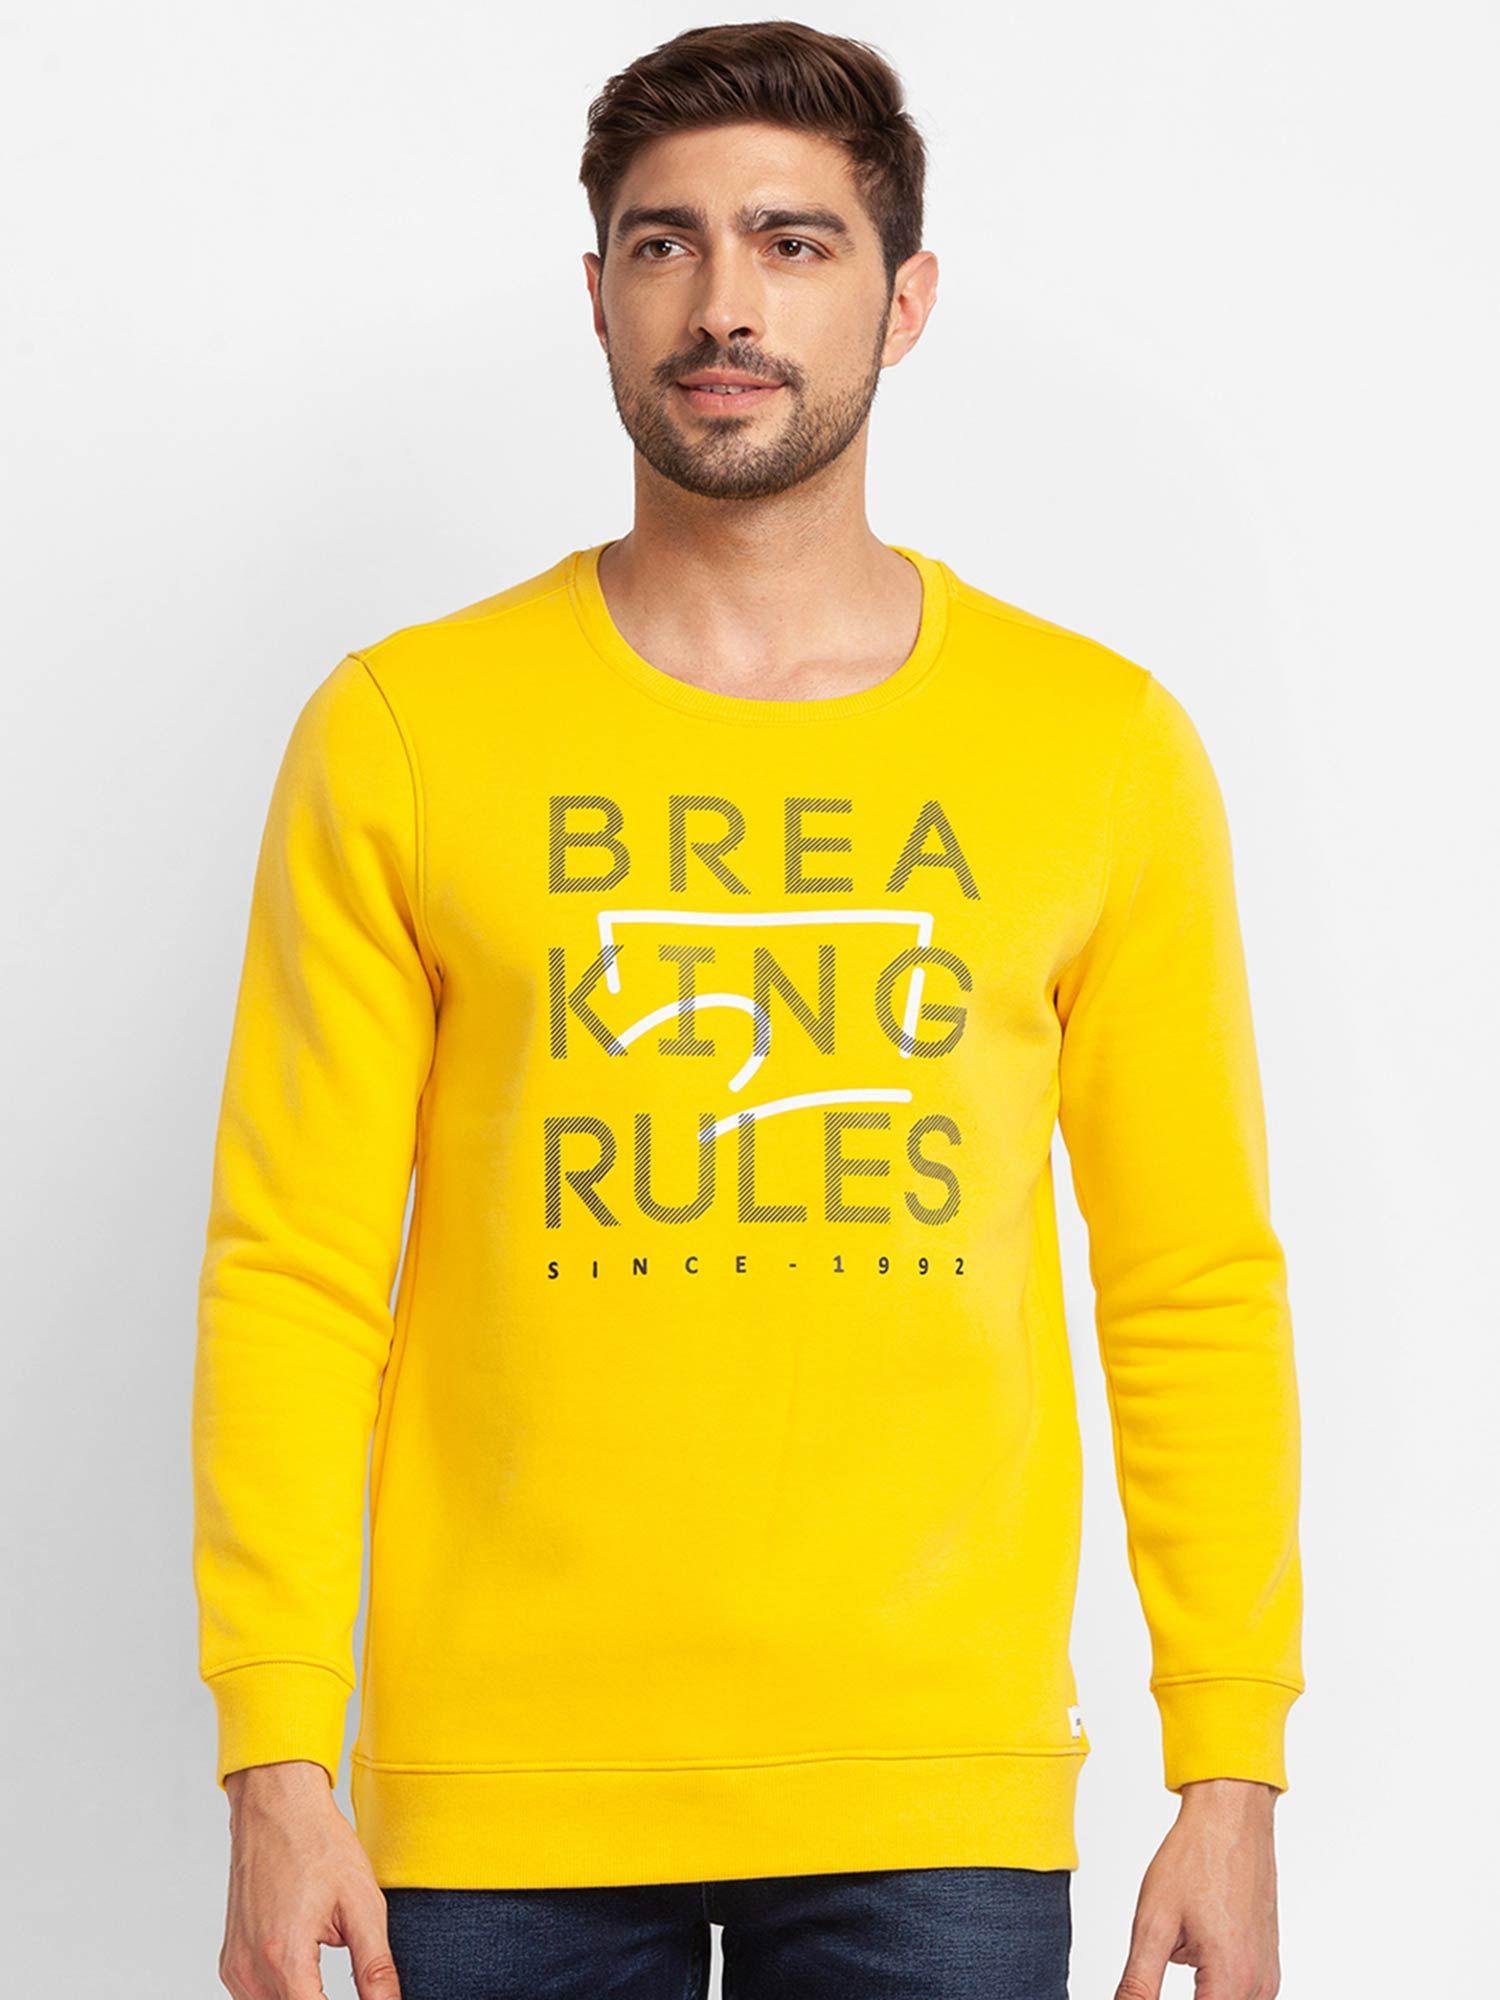 chrome yellow cotton full sleeve round neck sweatshirt for men